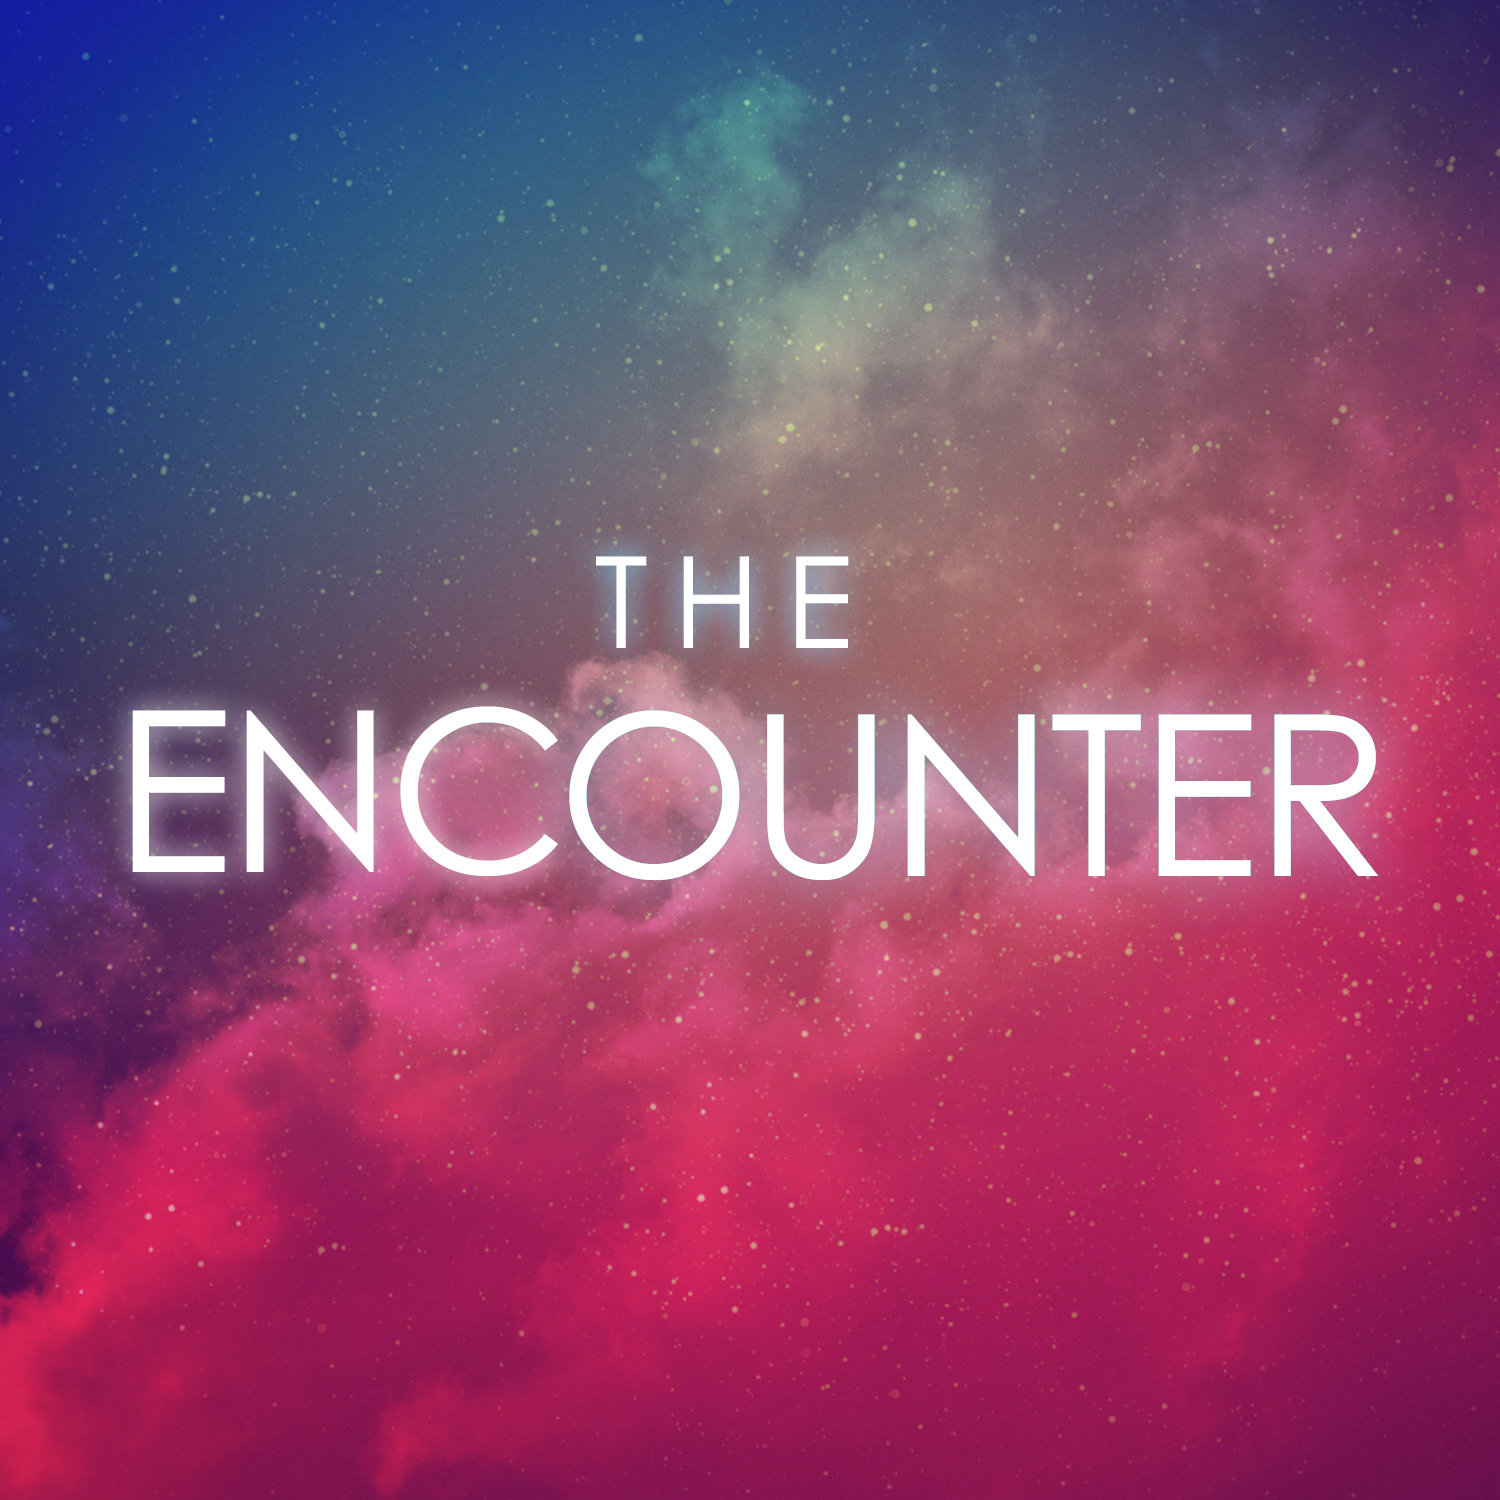 The Encounter DVD Series